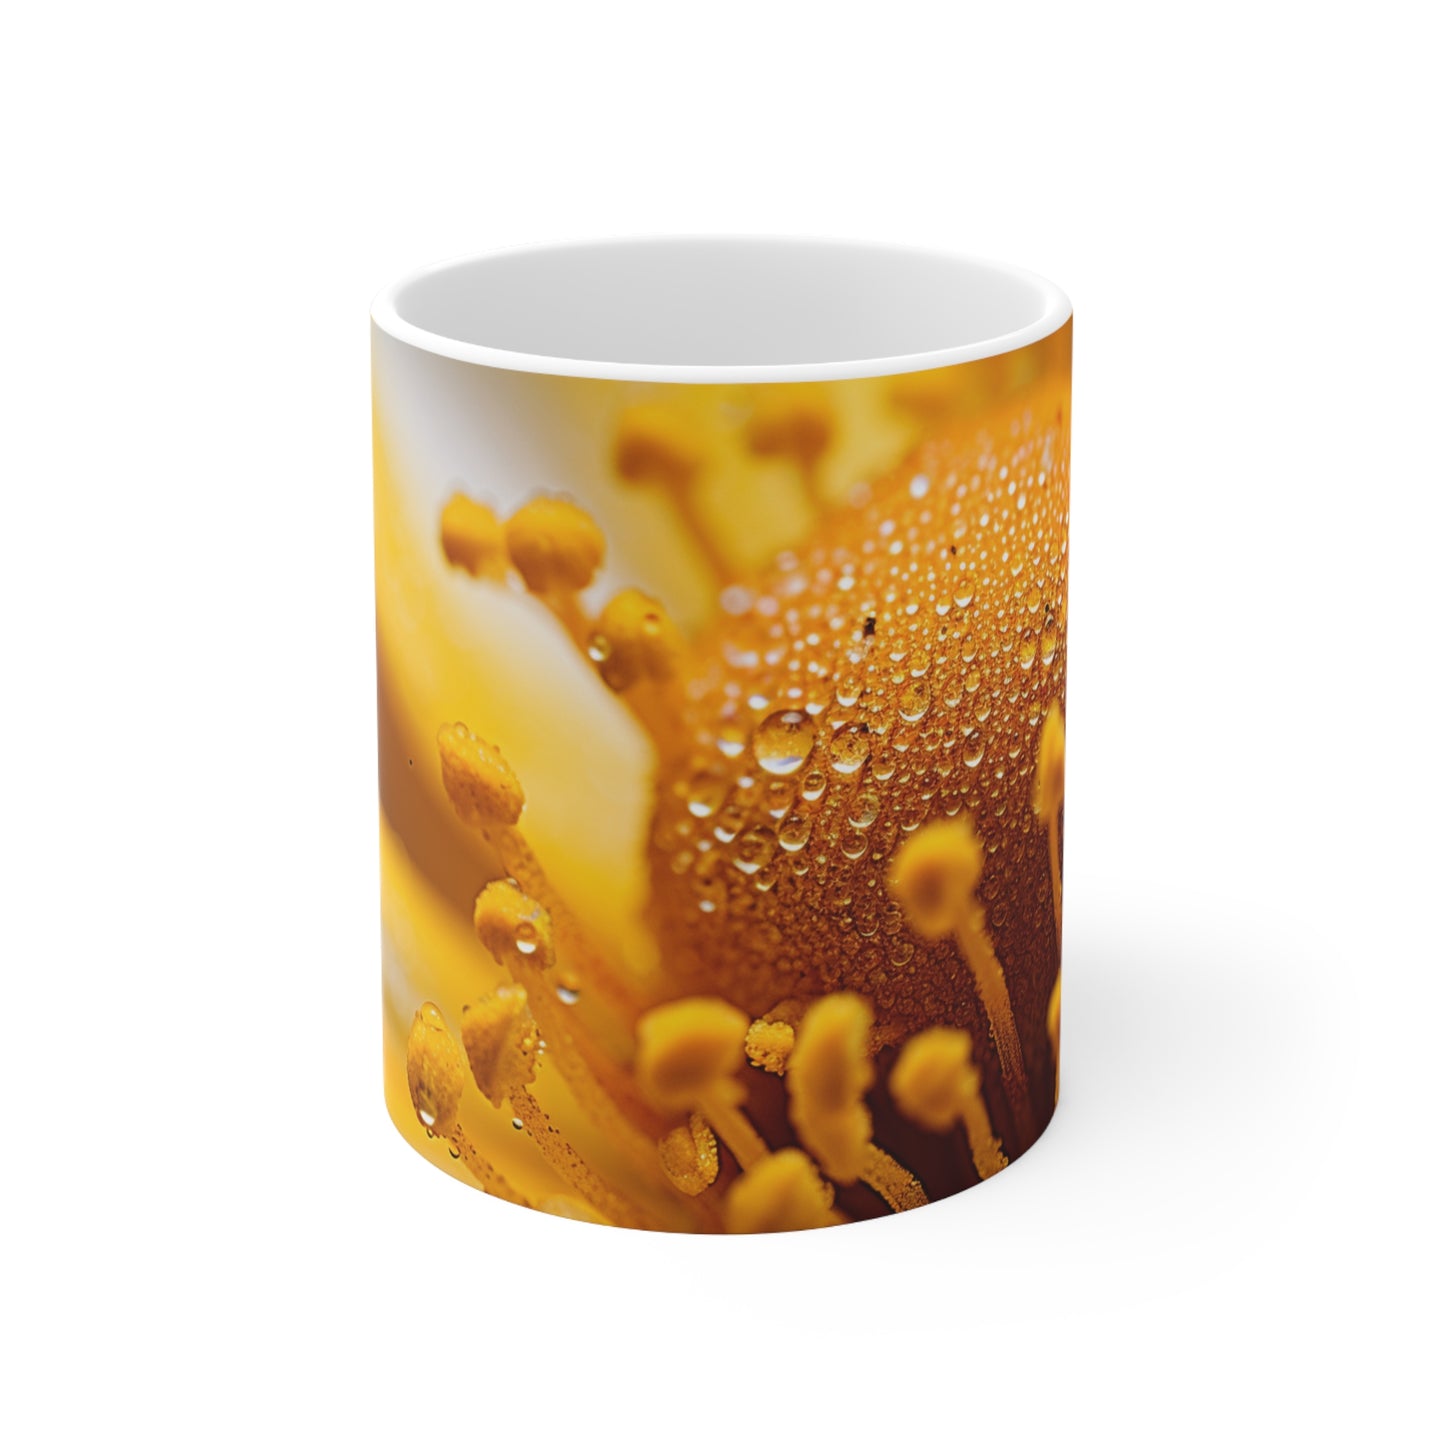 Yellow Flower Ceramic Mug 11oz